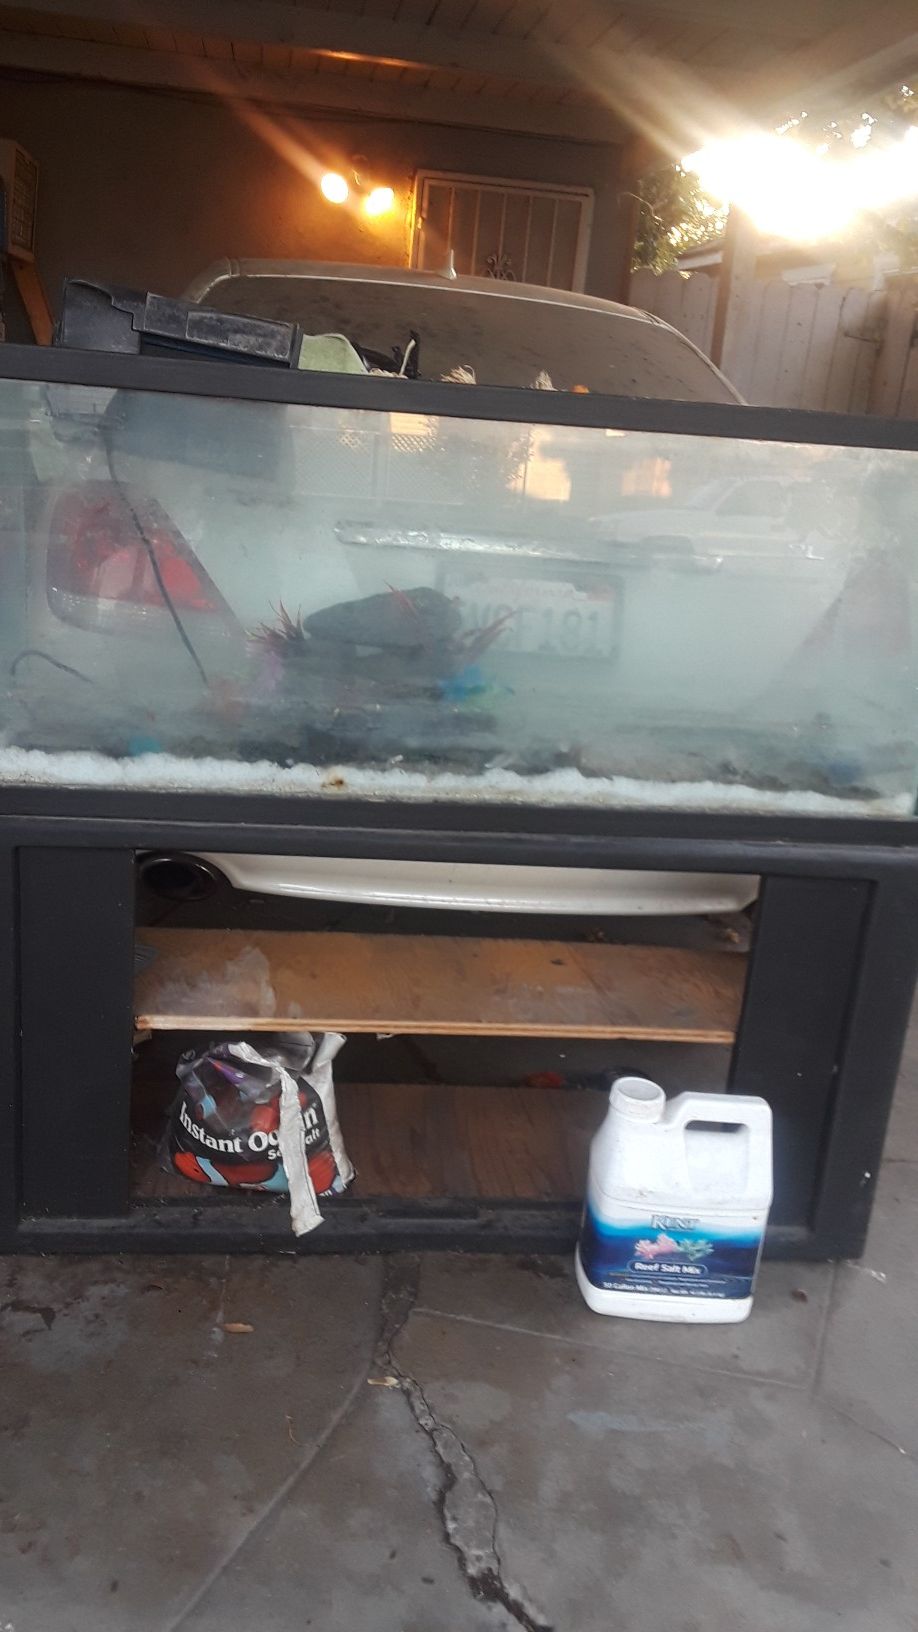 55 gallon fish tank